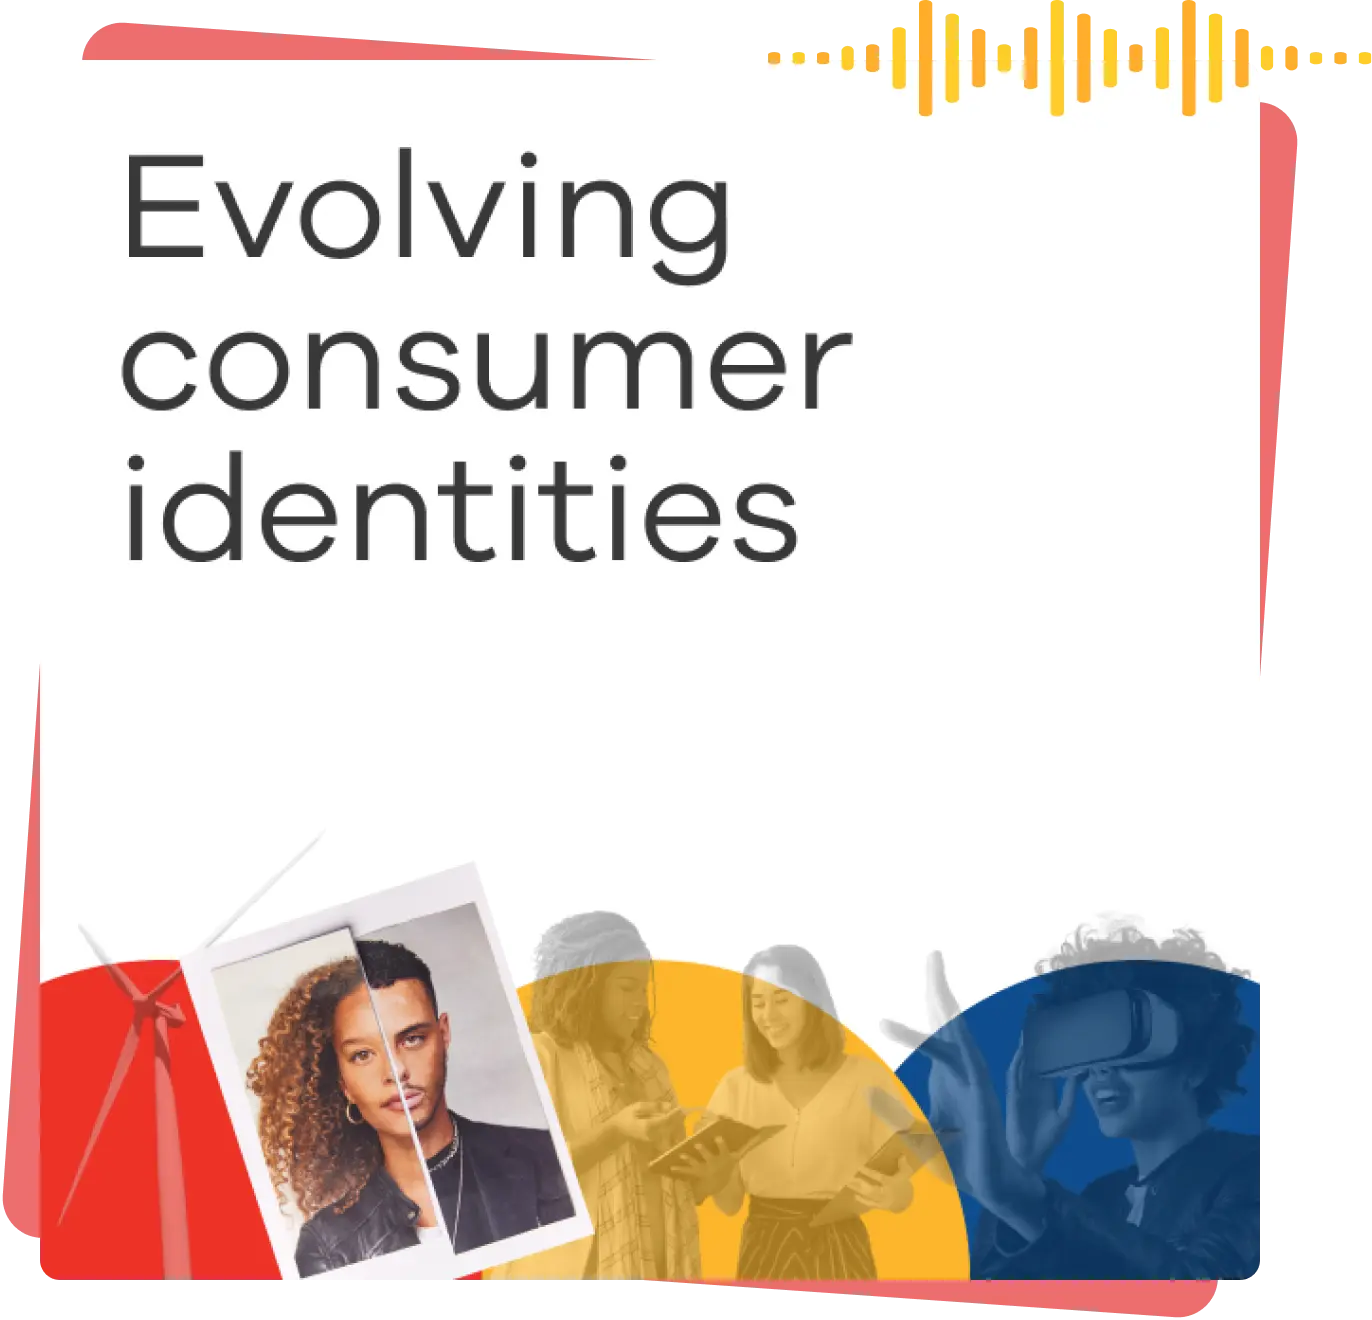 Evolving consumer identities